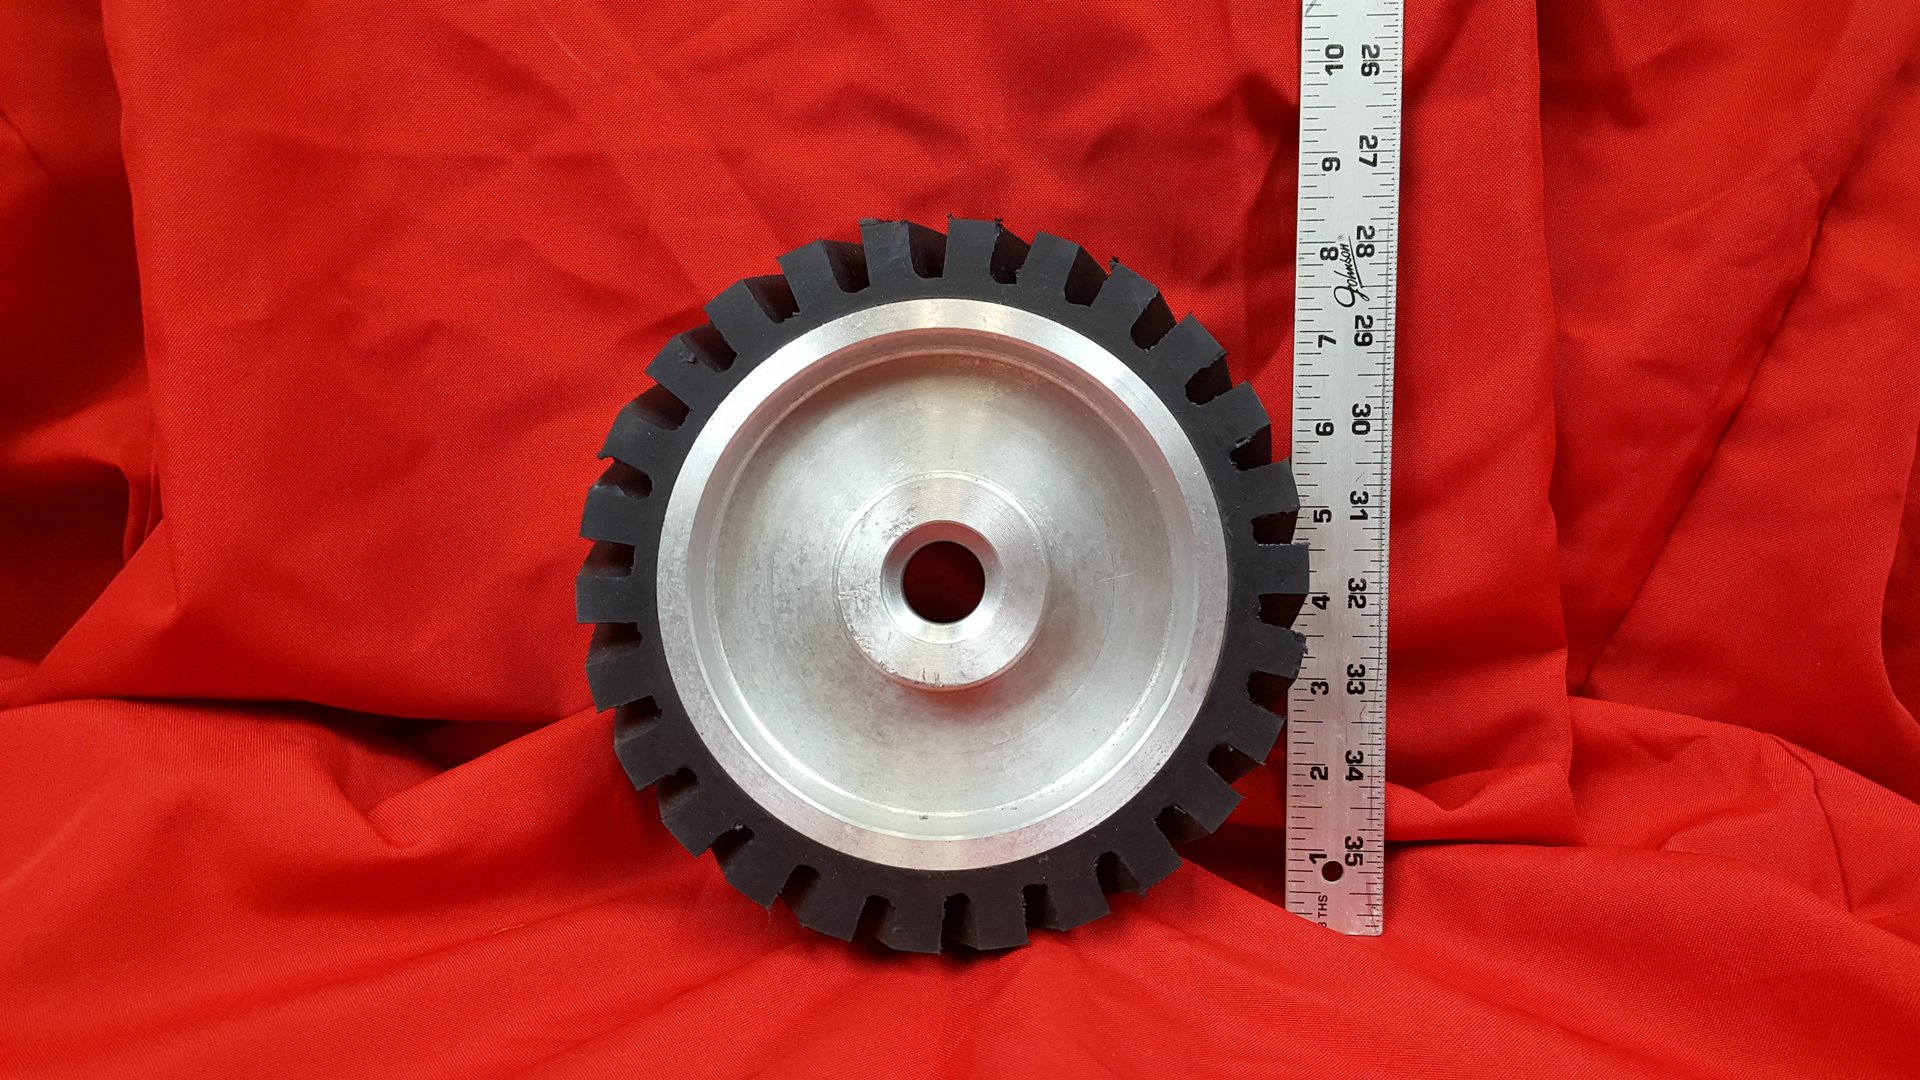 8" 200mm Serrated Rubber Bearing Contact Polishing Wheel for Belt Sander Grinder